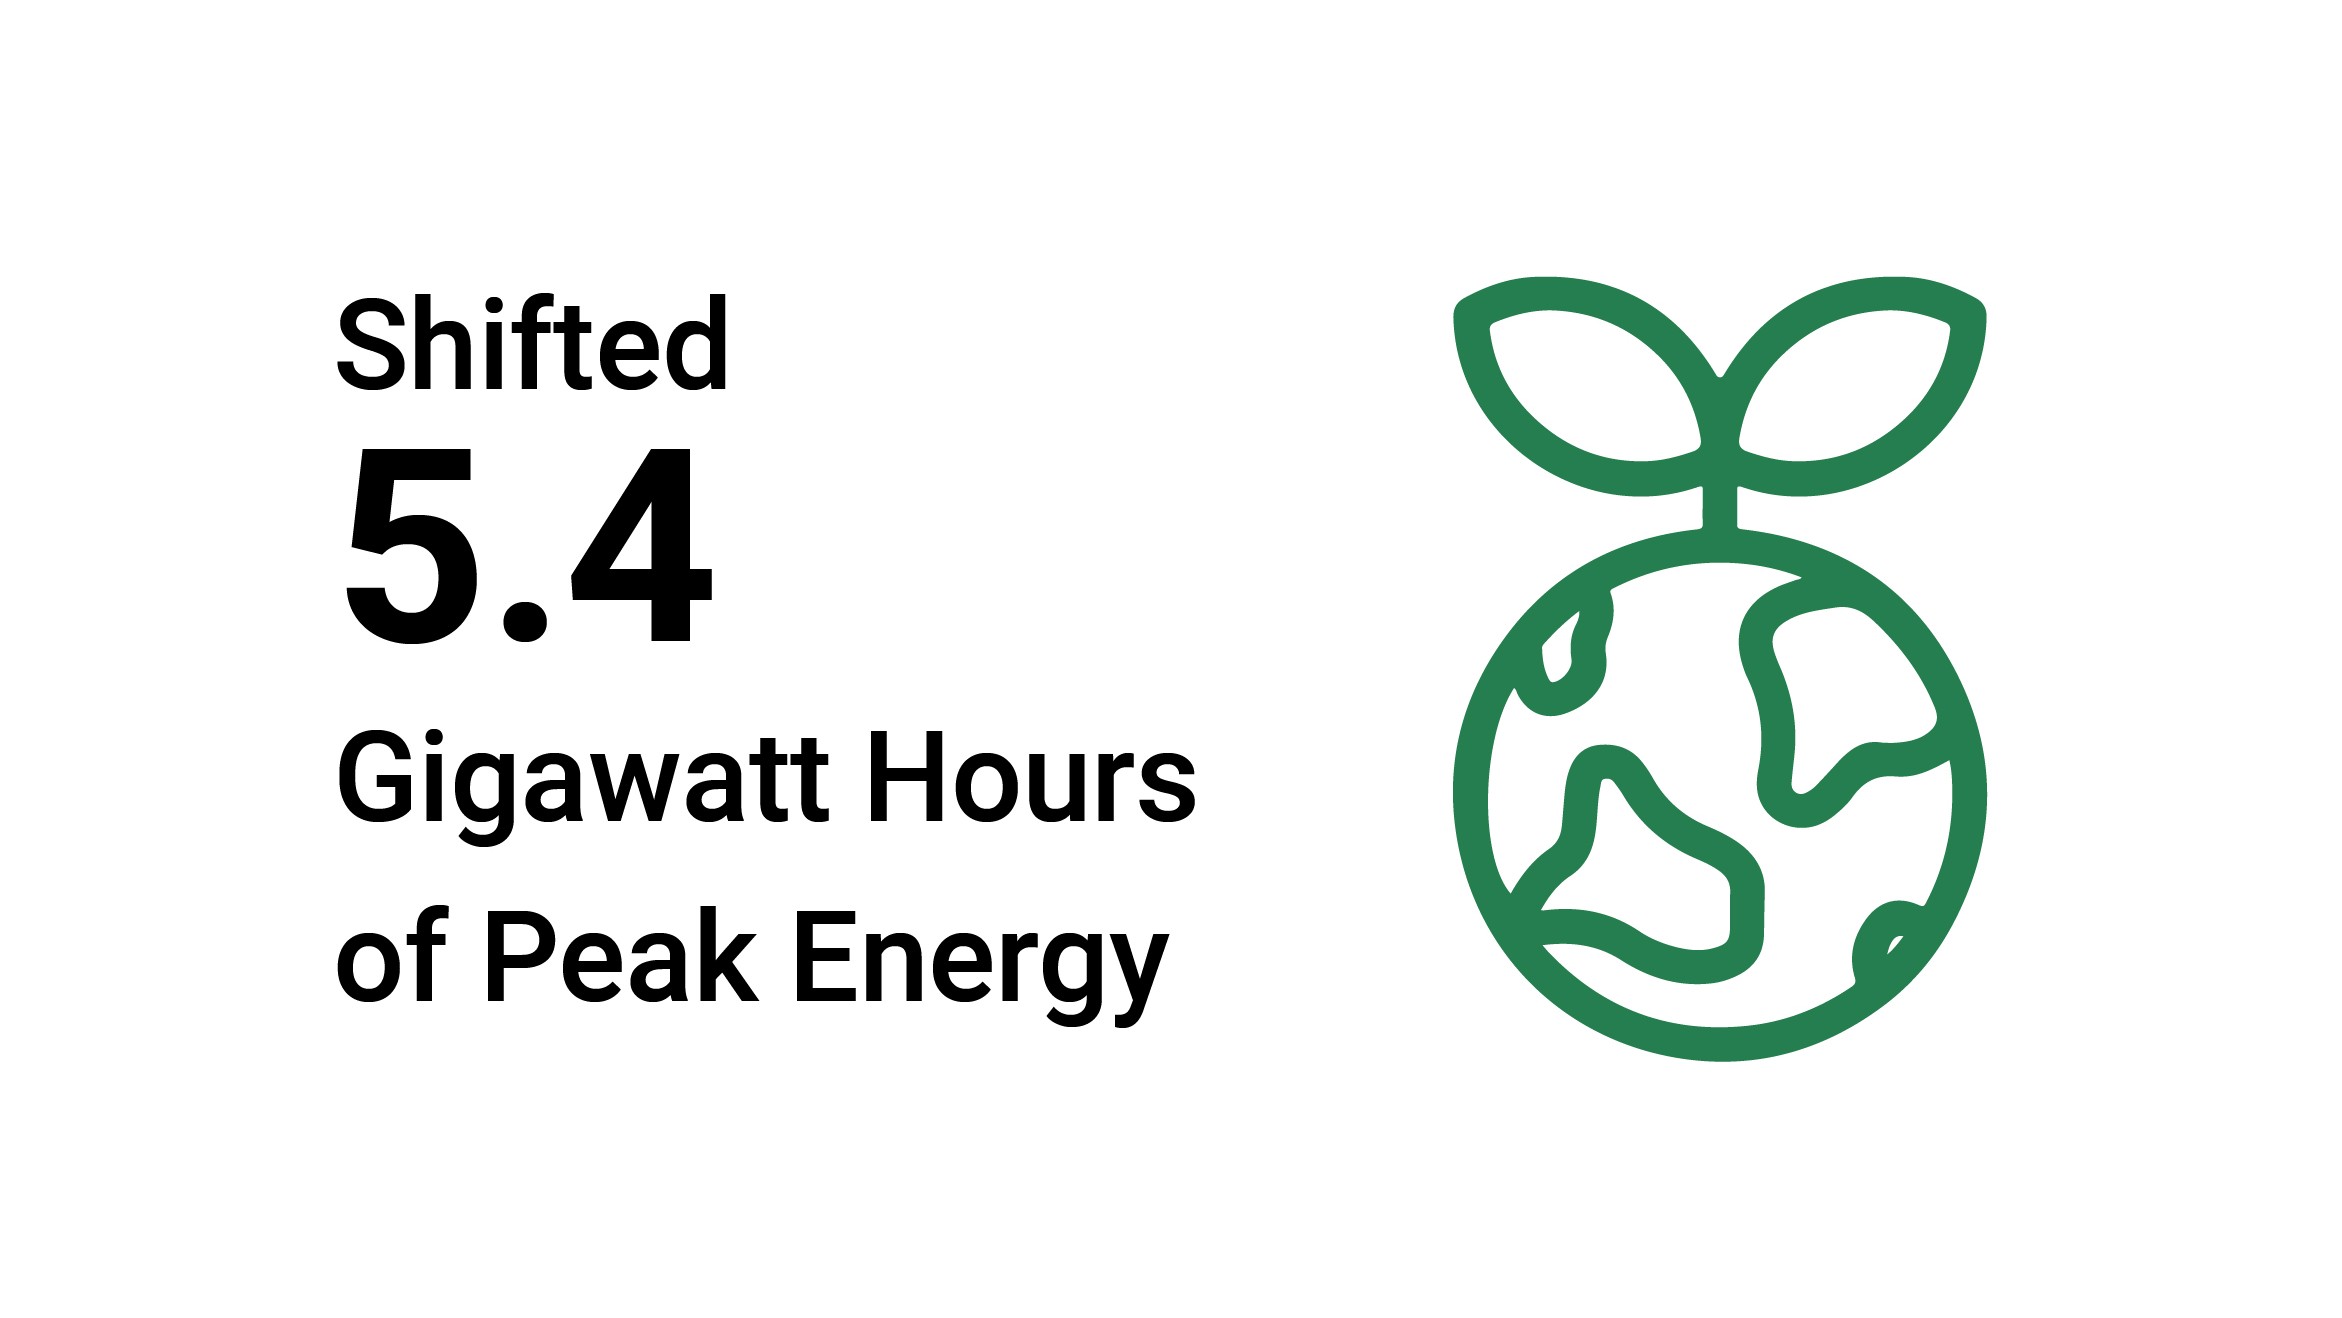 5.4 Gigawatt hours of shifted energy